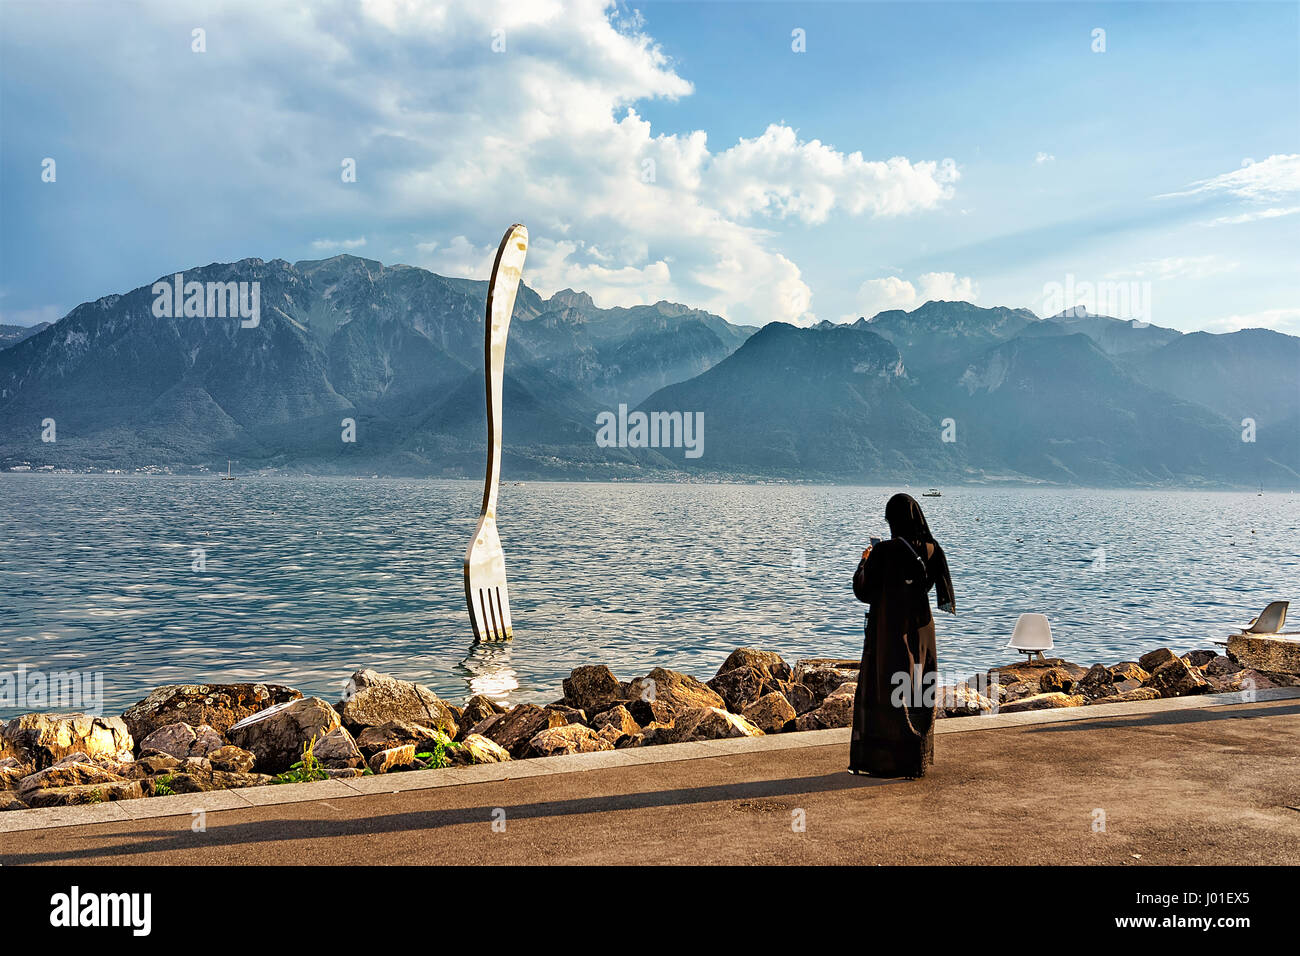 Vevey, Switzerland - August 27, 2016: Muslim woman in black burqa at Fork sculpture at Geneva Lake of Vevey Riviera, Vaud canton, Switzerland. Alps mo Stock Photo